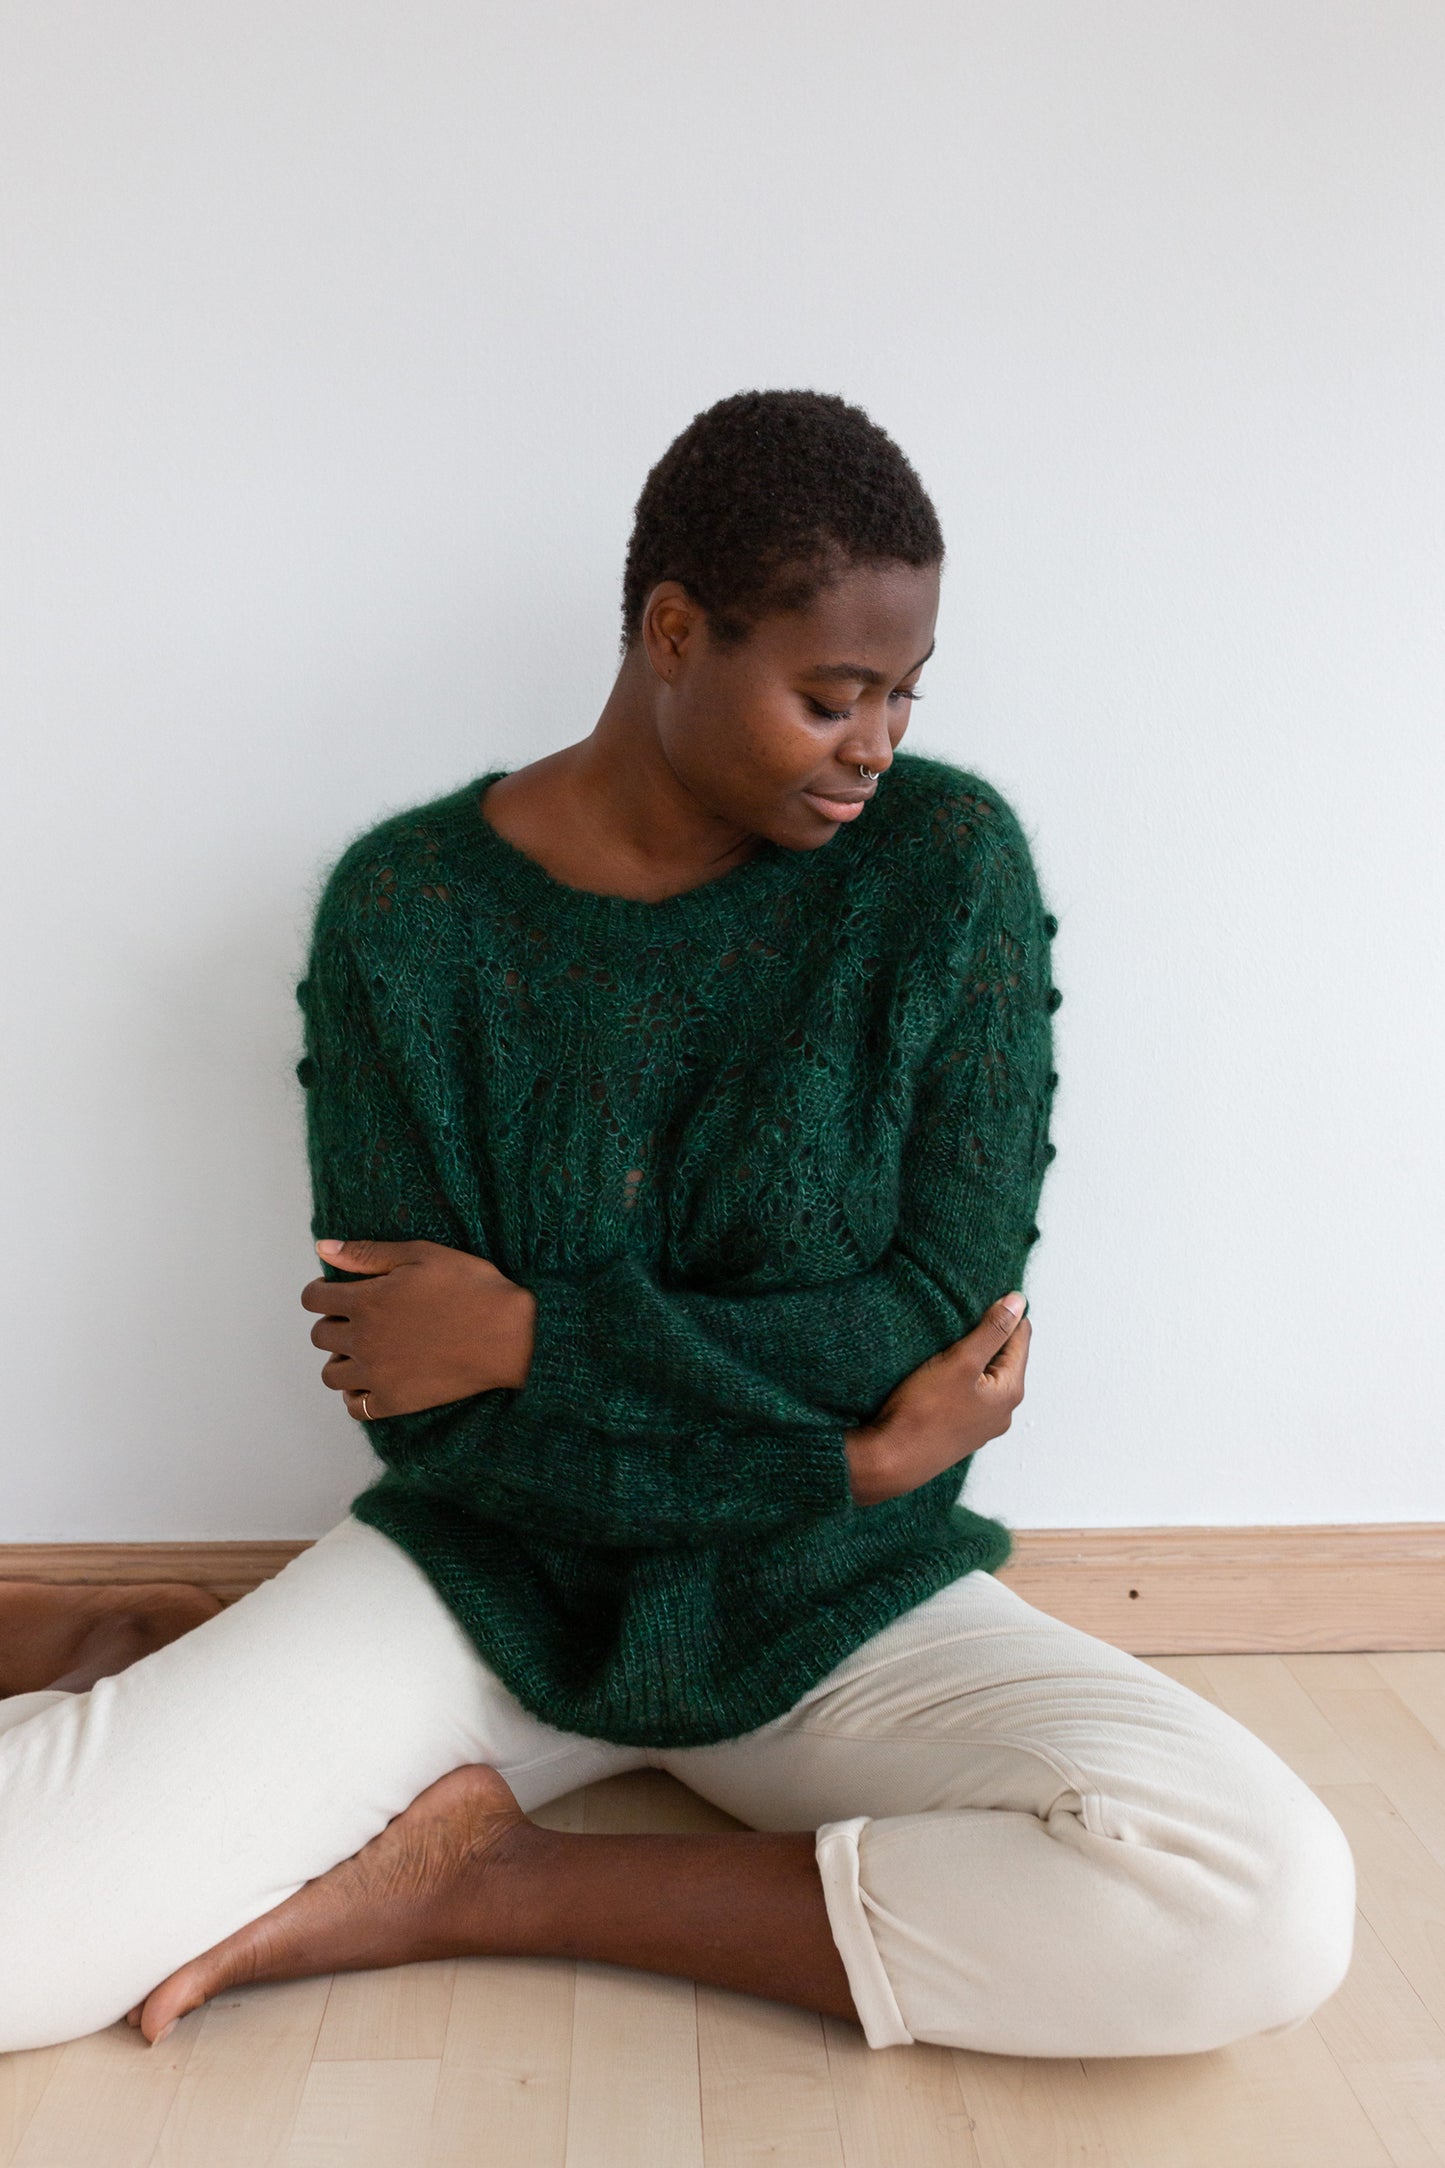 Lace Yoke Sweater in Kid Mohair Silk "After the Rain" Knitting Pattern